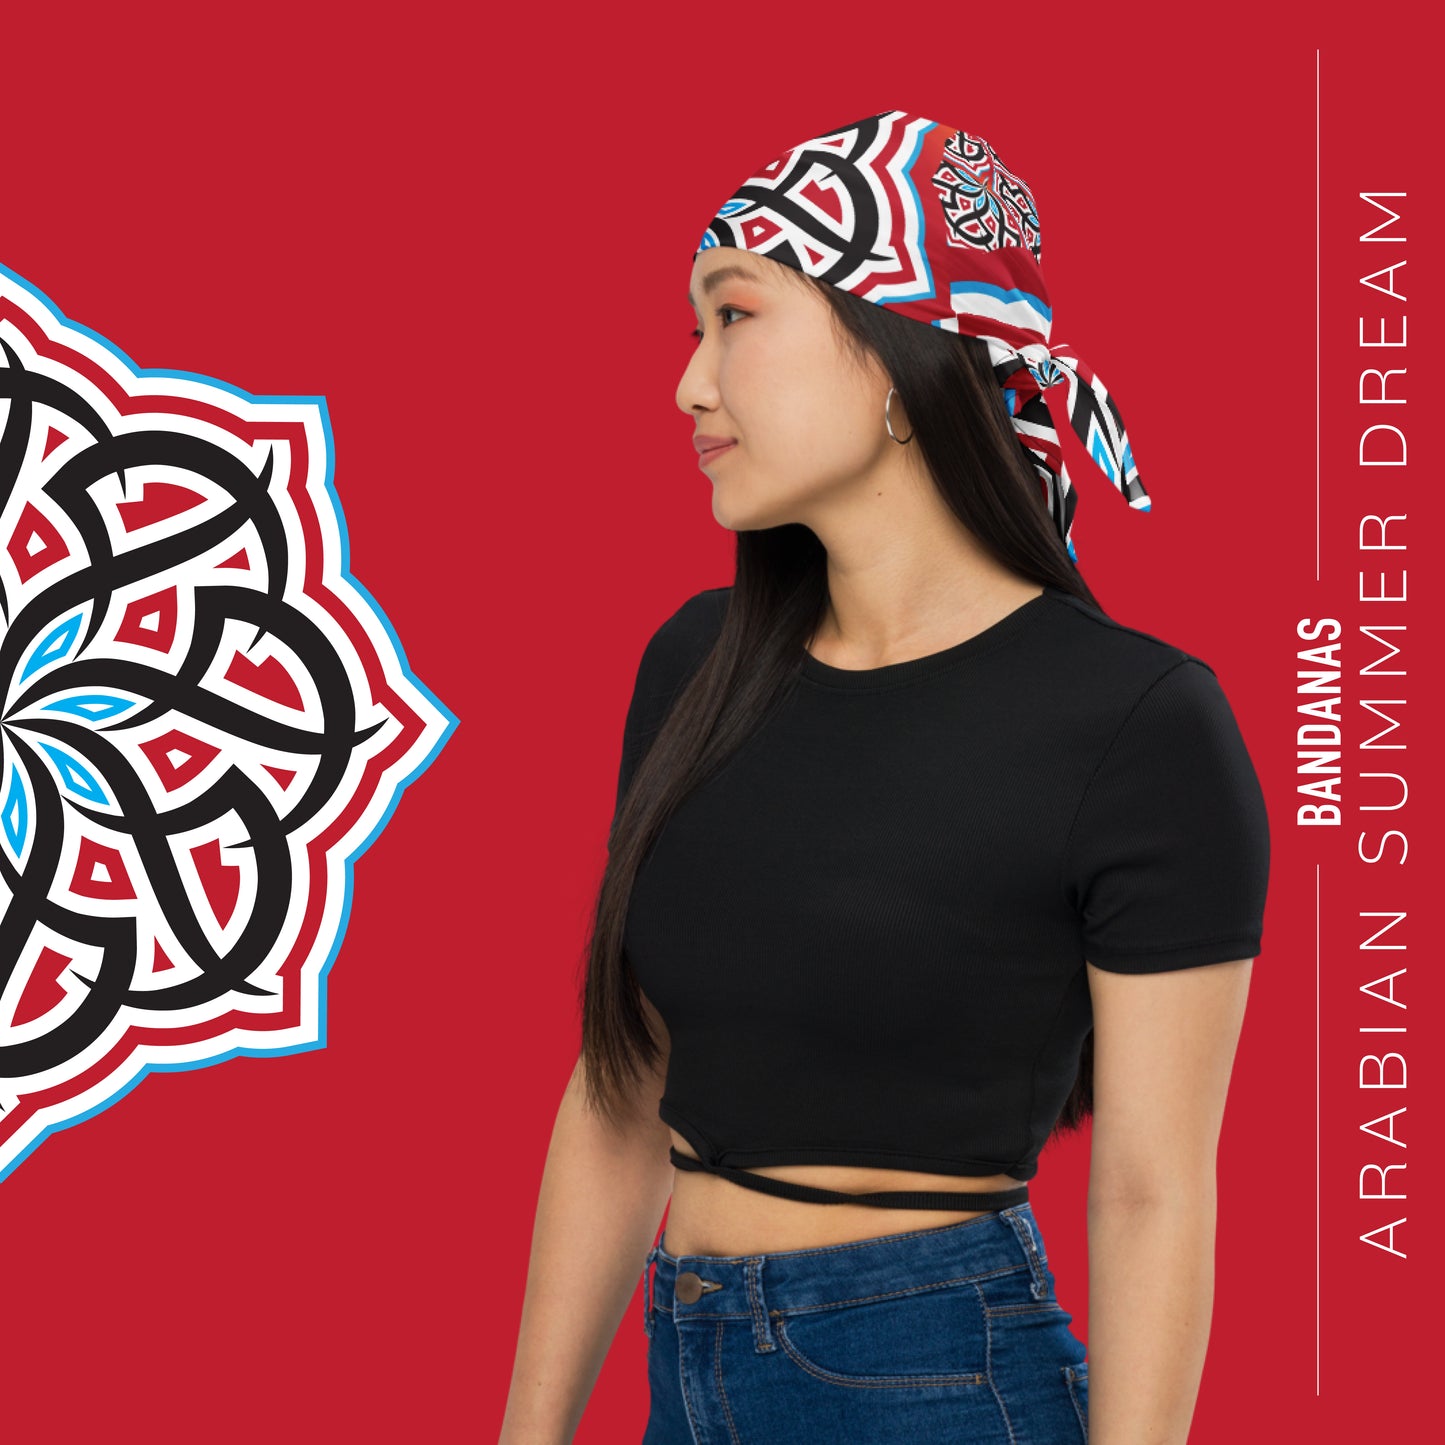 Arabian Summer Dream - All-over print bandana by Craitza©